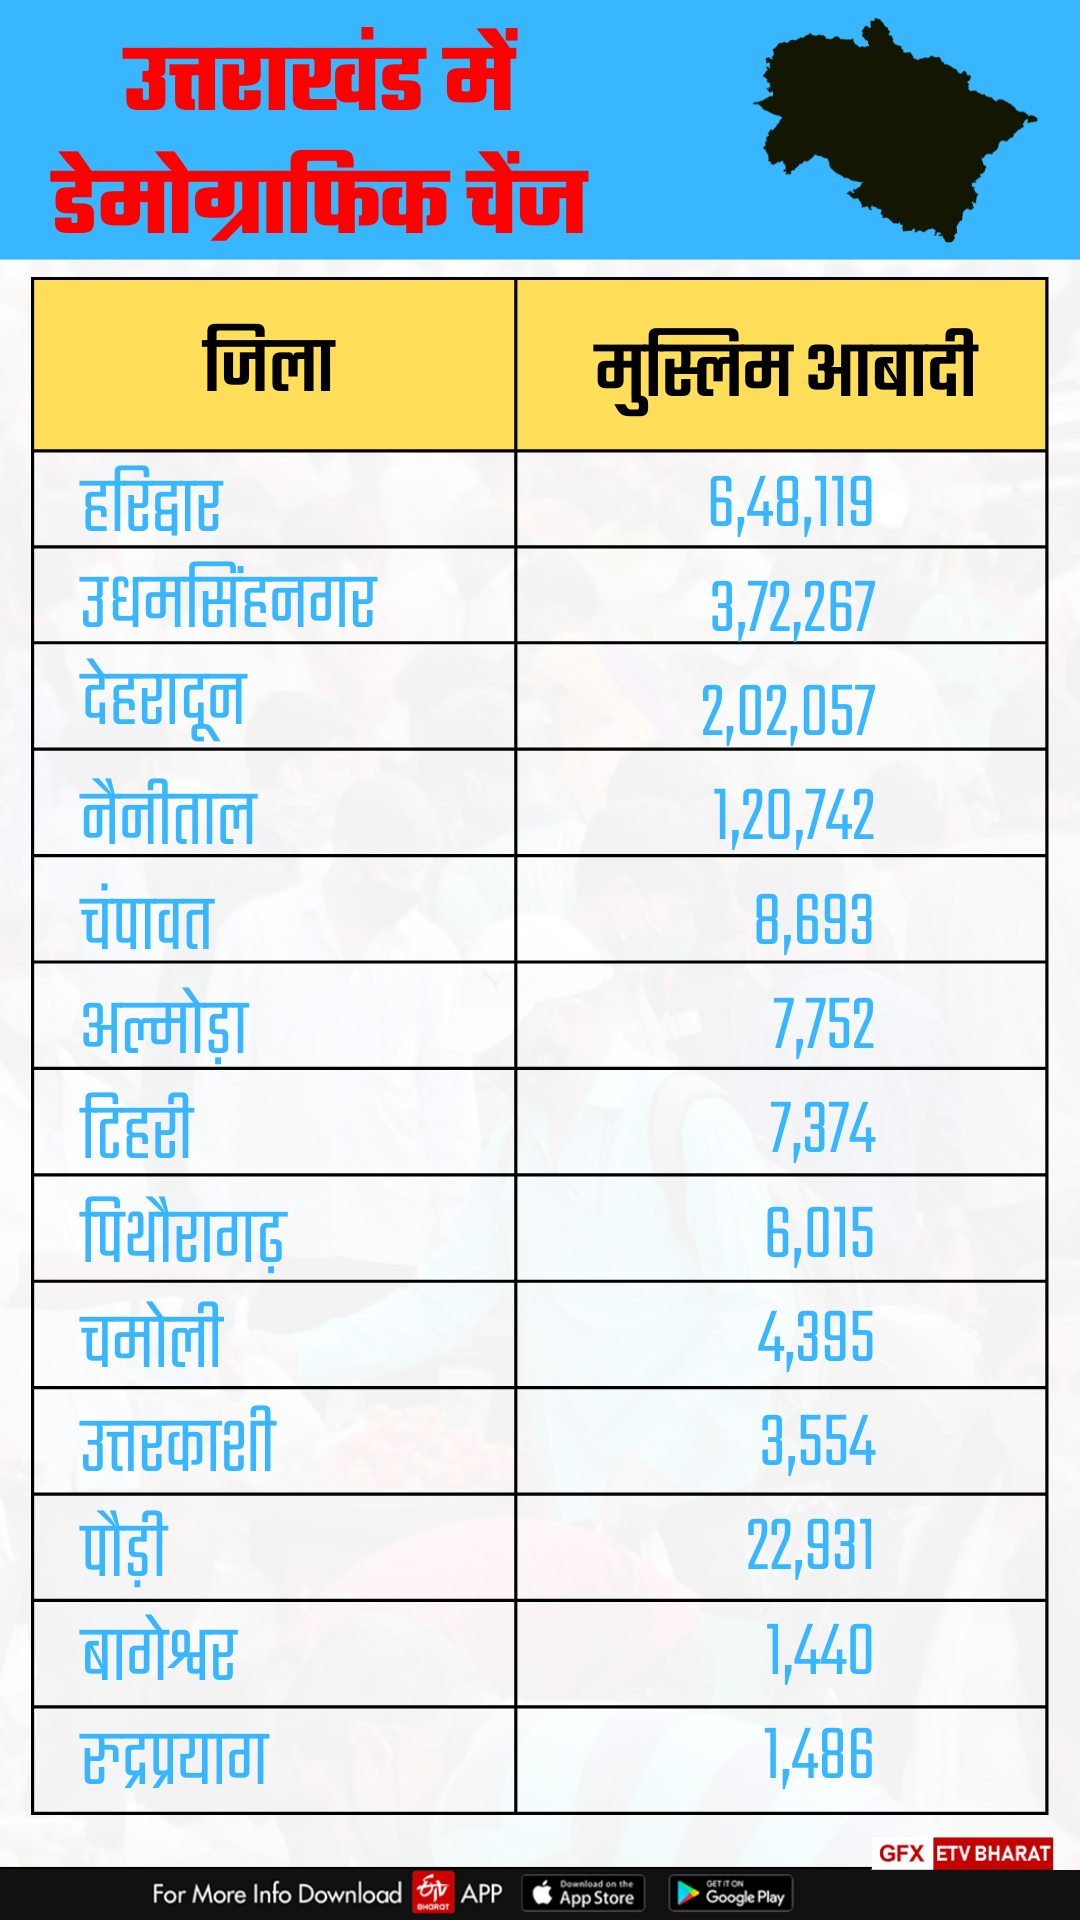 Demographic Change in Uttarakhand